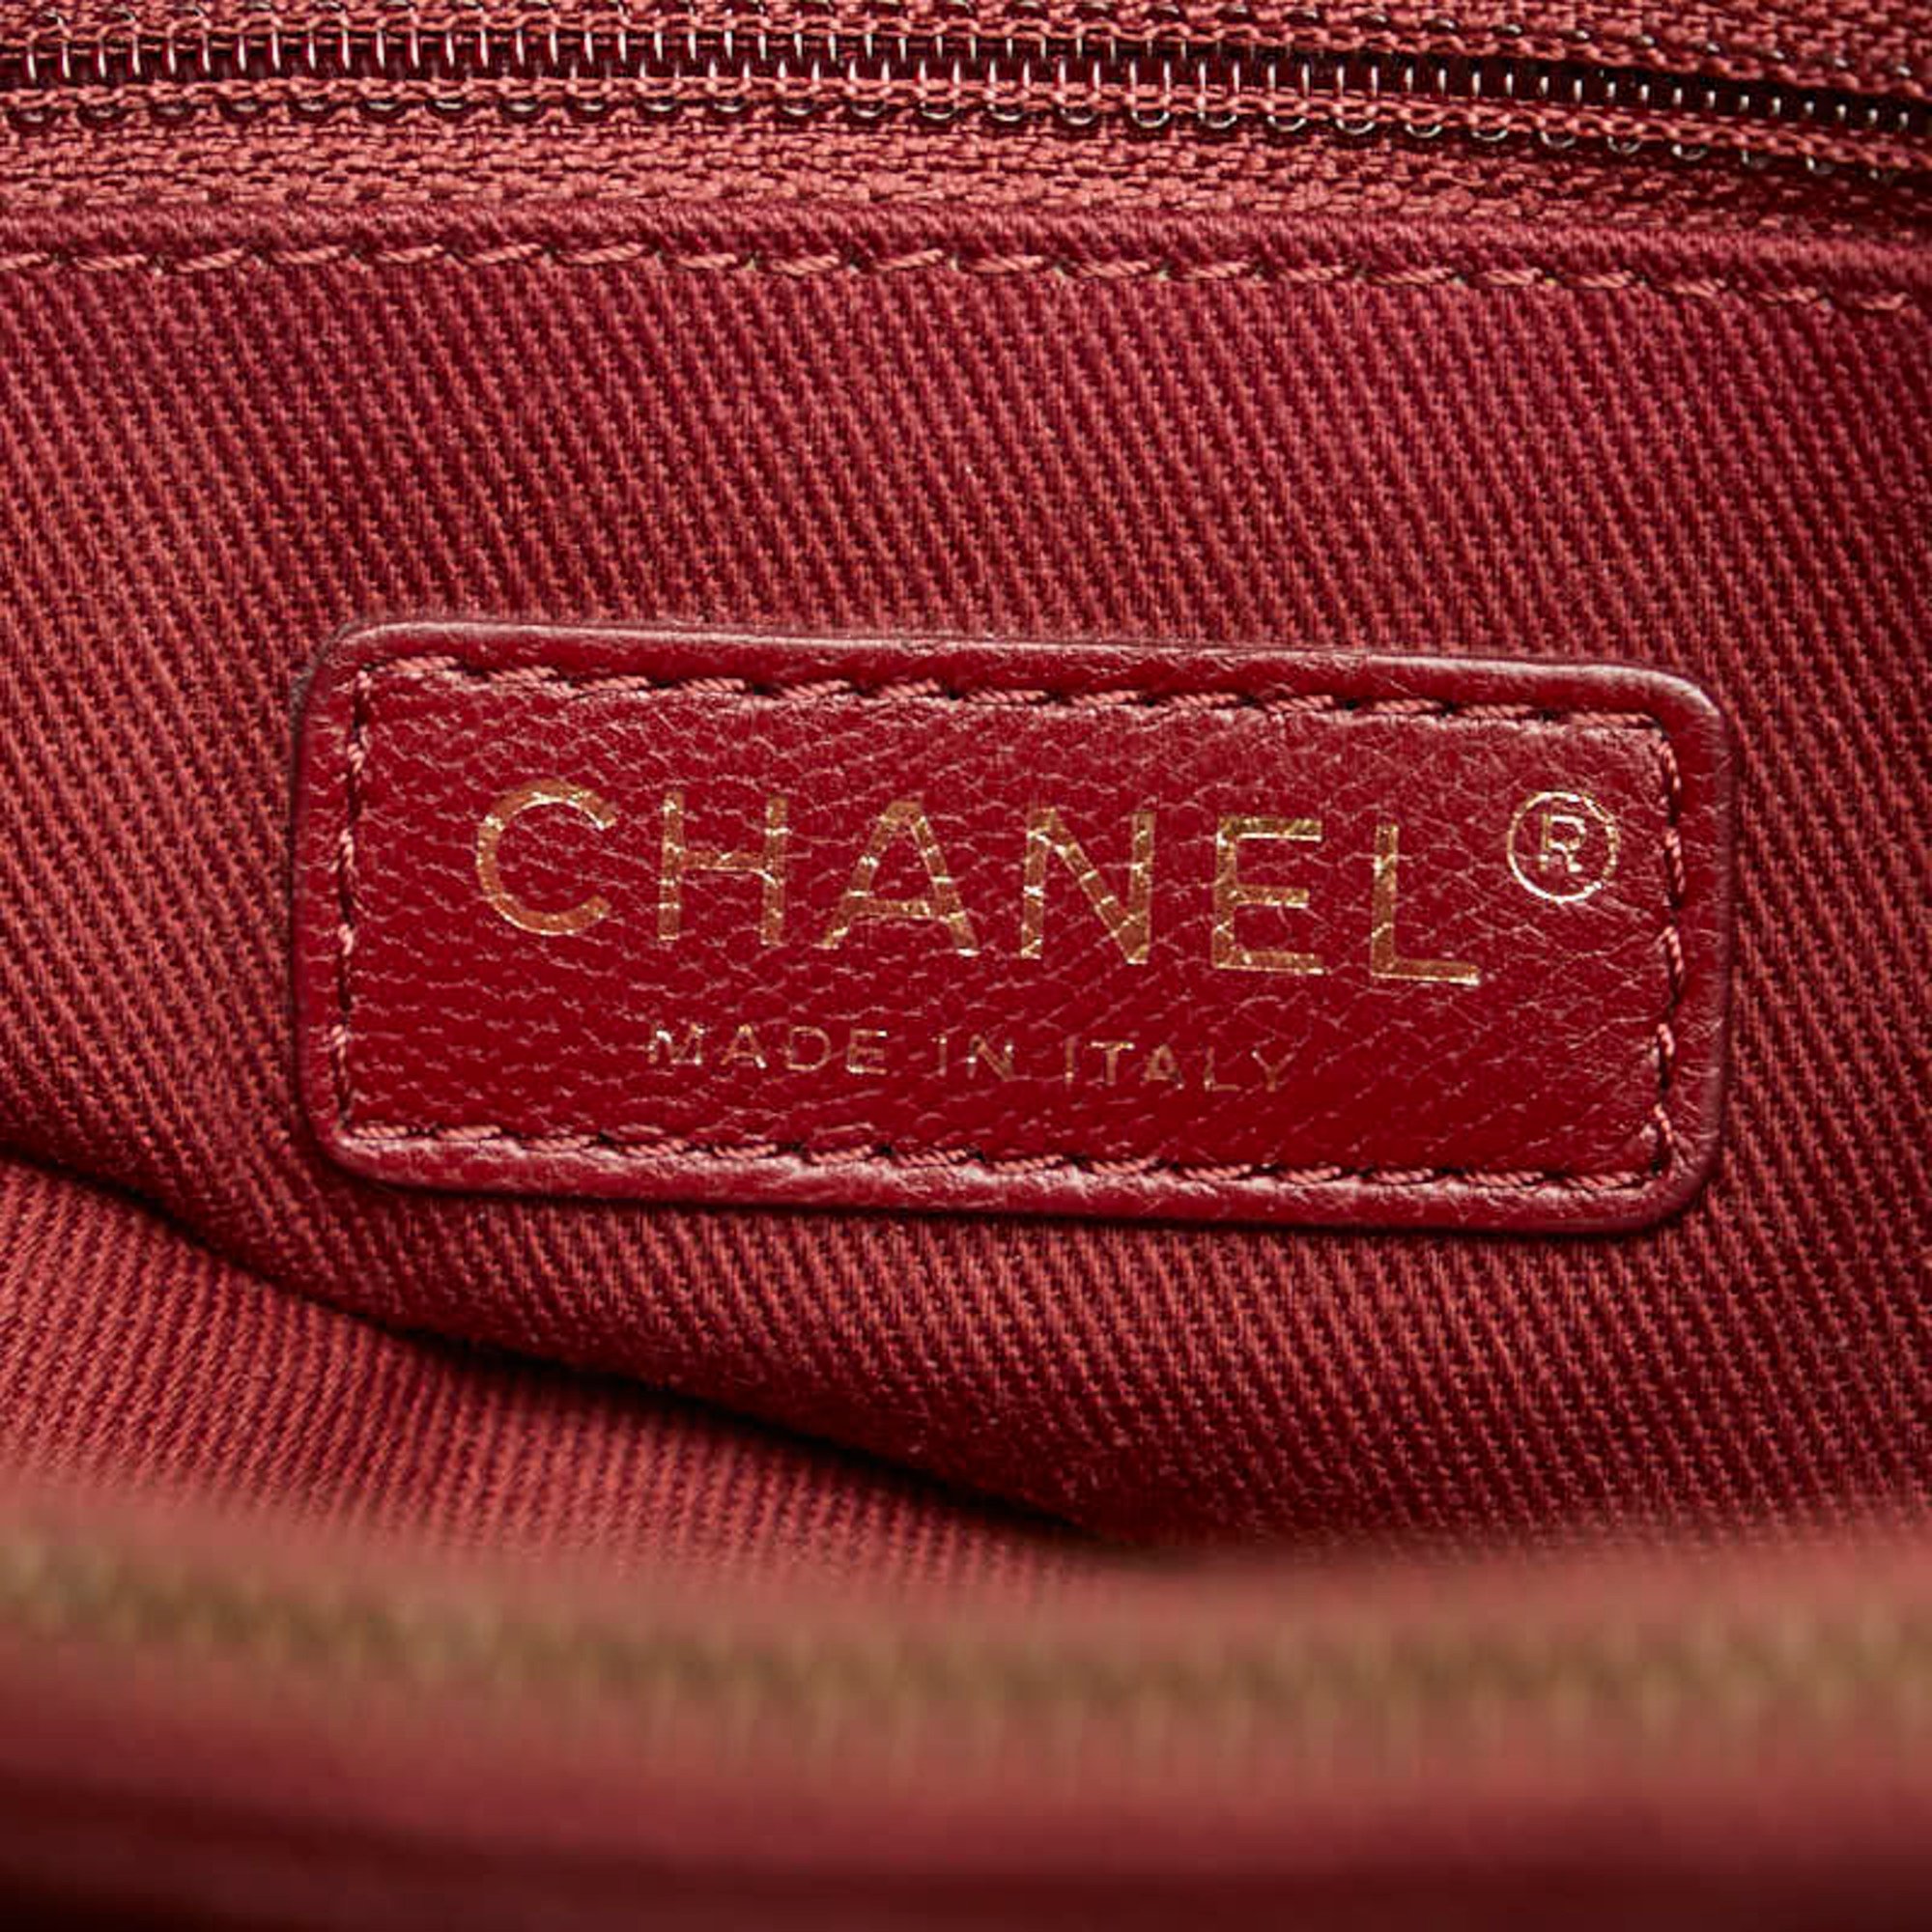 Chanel Matelasse Coco Mark Handbag Shoulder Bag Bordeaux Wine Red Caviar Skin Women's CHANEL